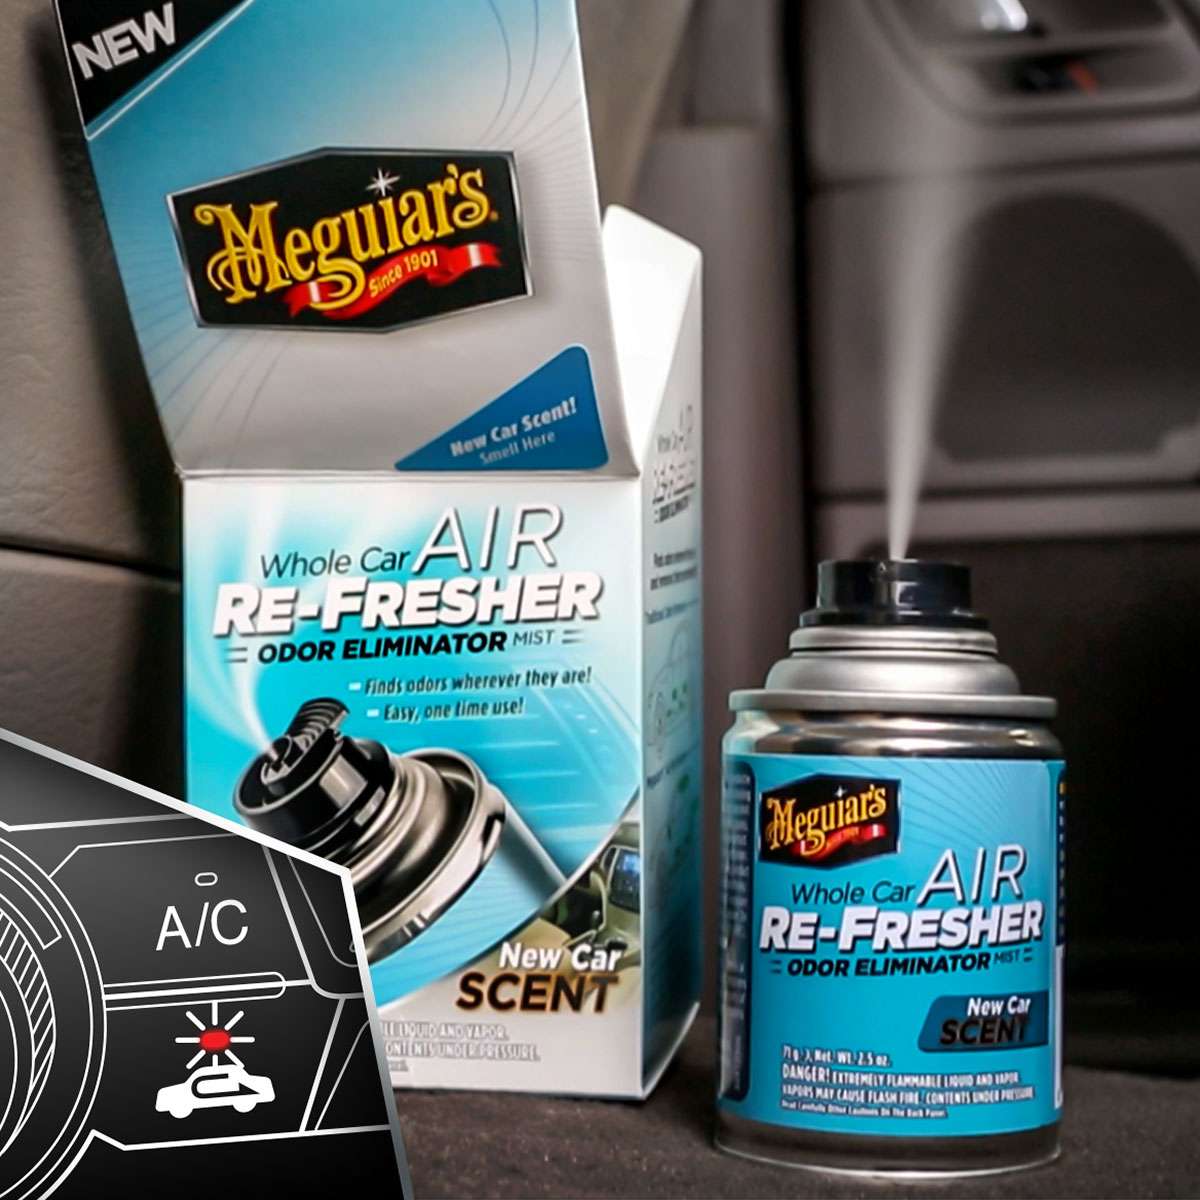  Meguiar's Whole Car Air Re-Fresher Odor Eliminator - New Car Scent